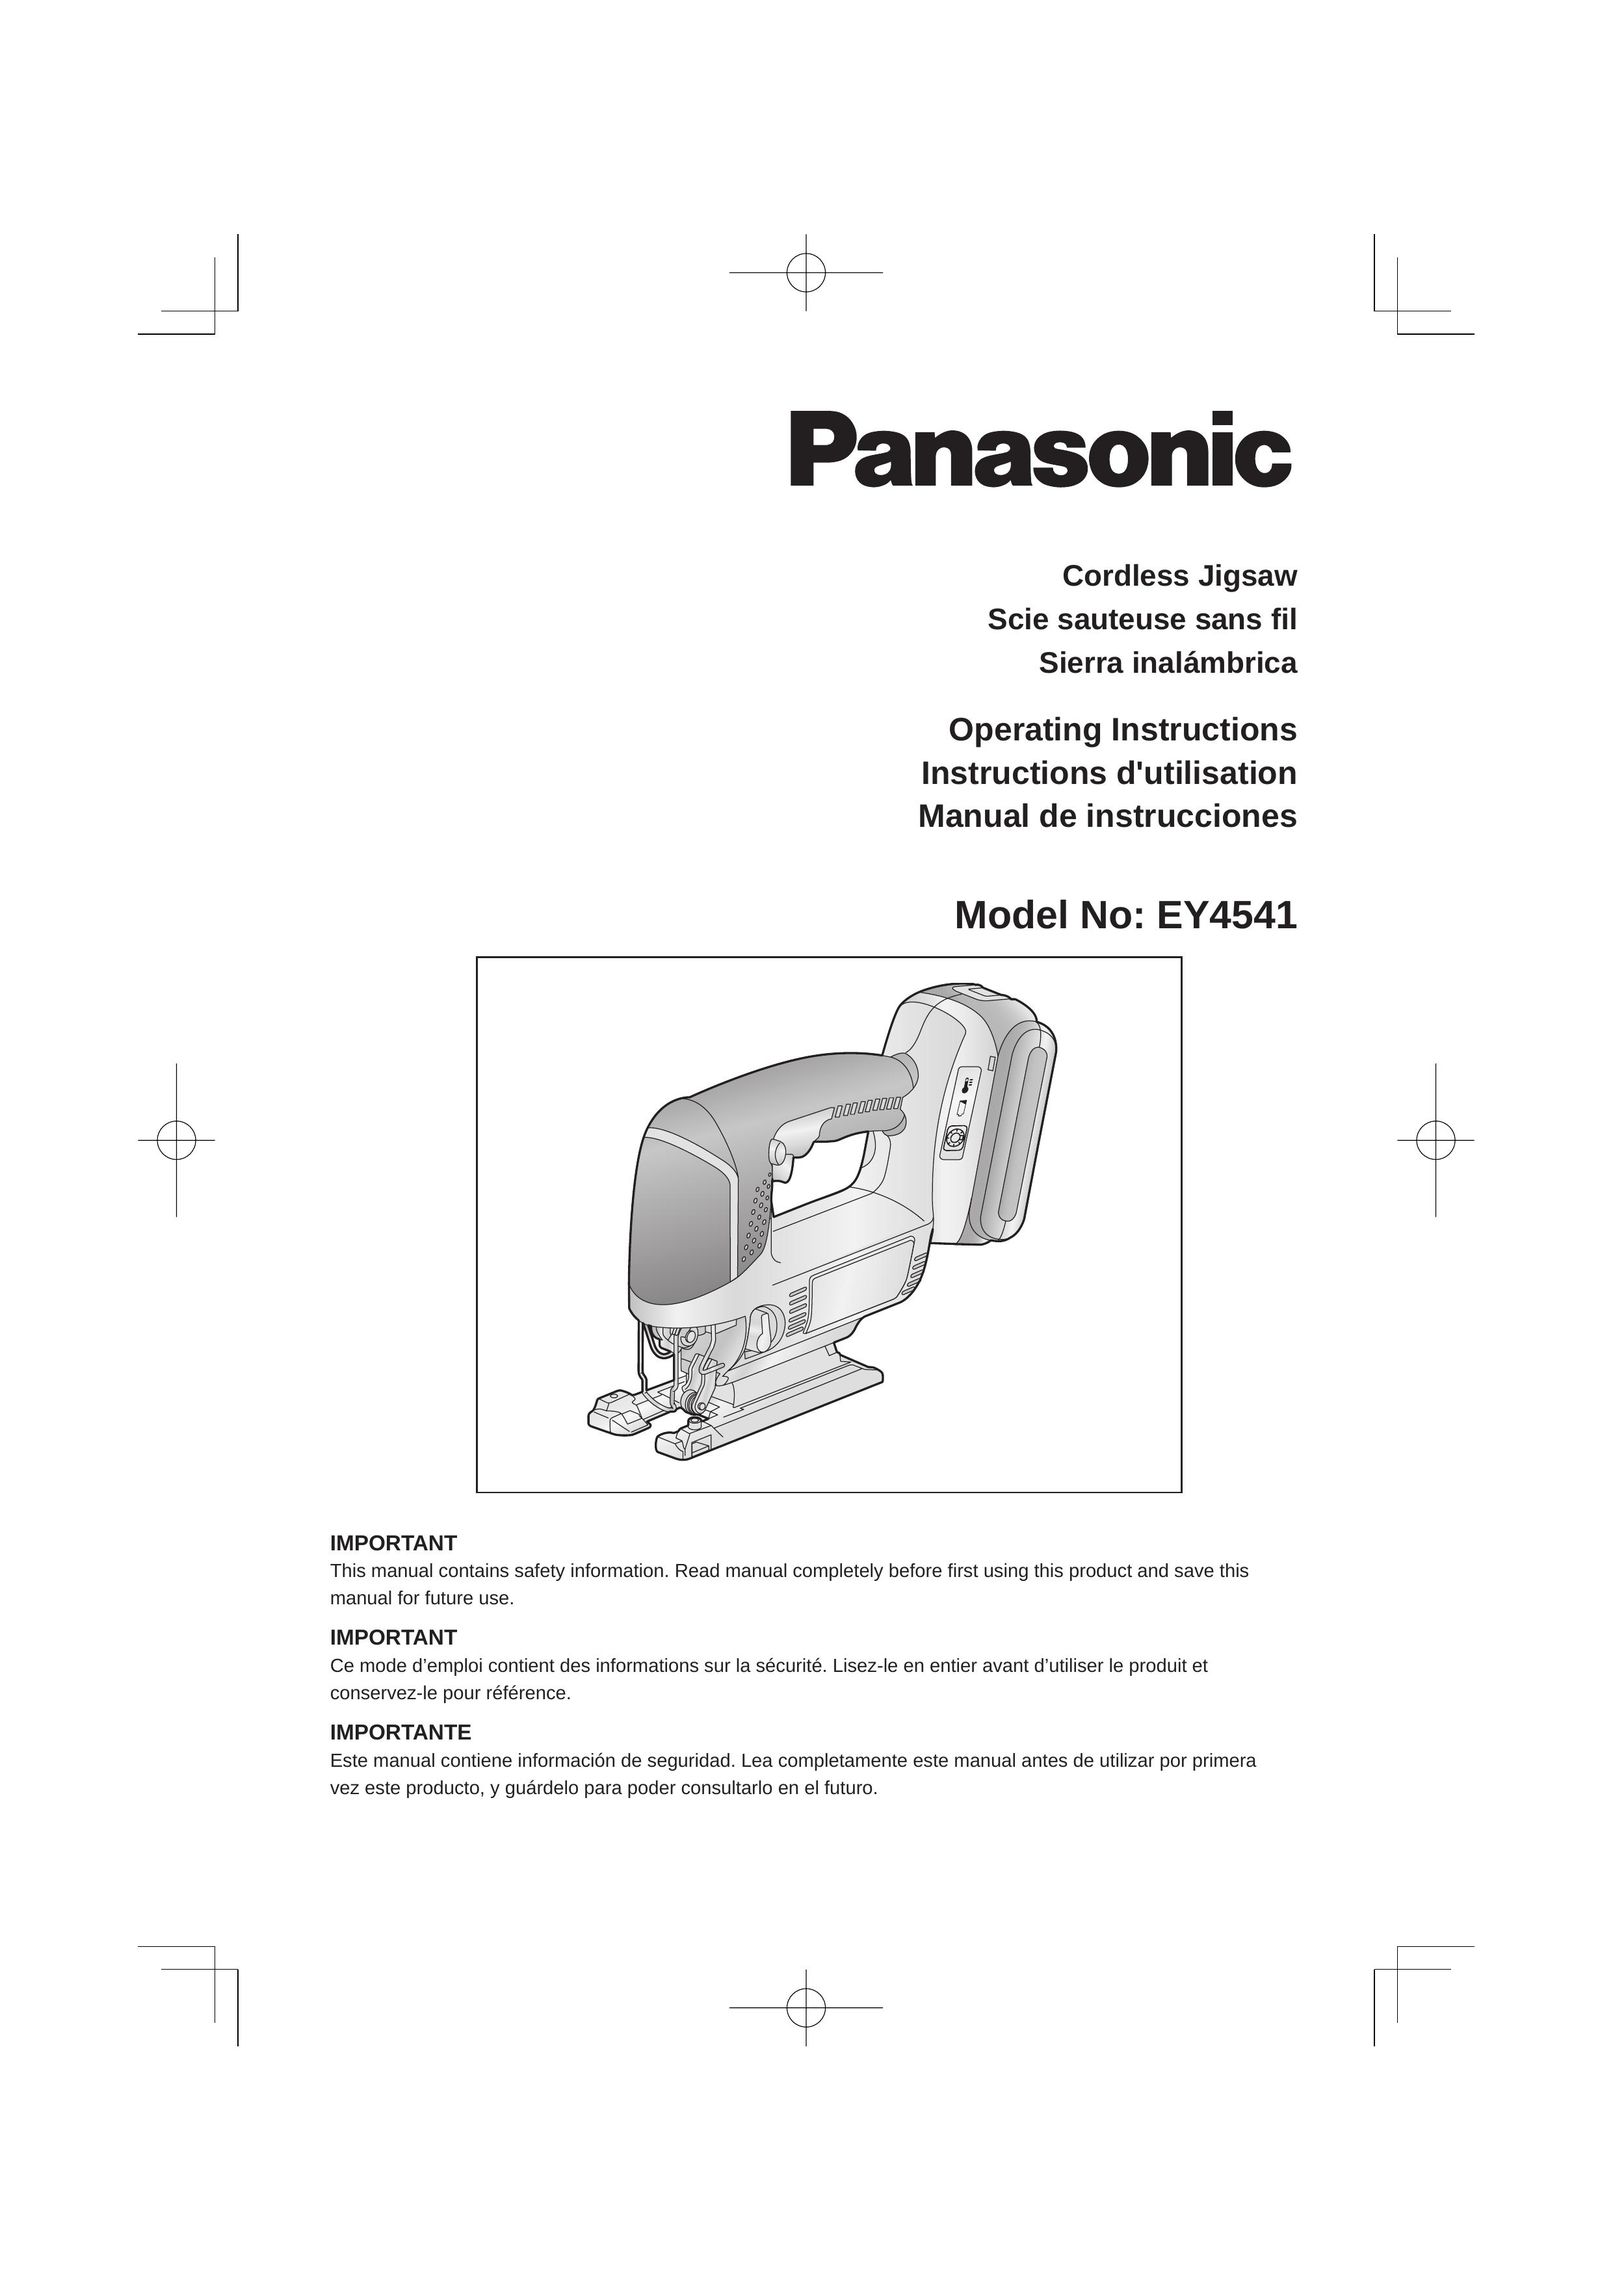 Panasonic EY4541 Cordless Saw User Manual